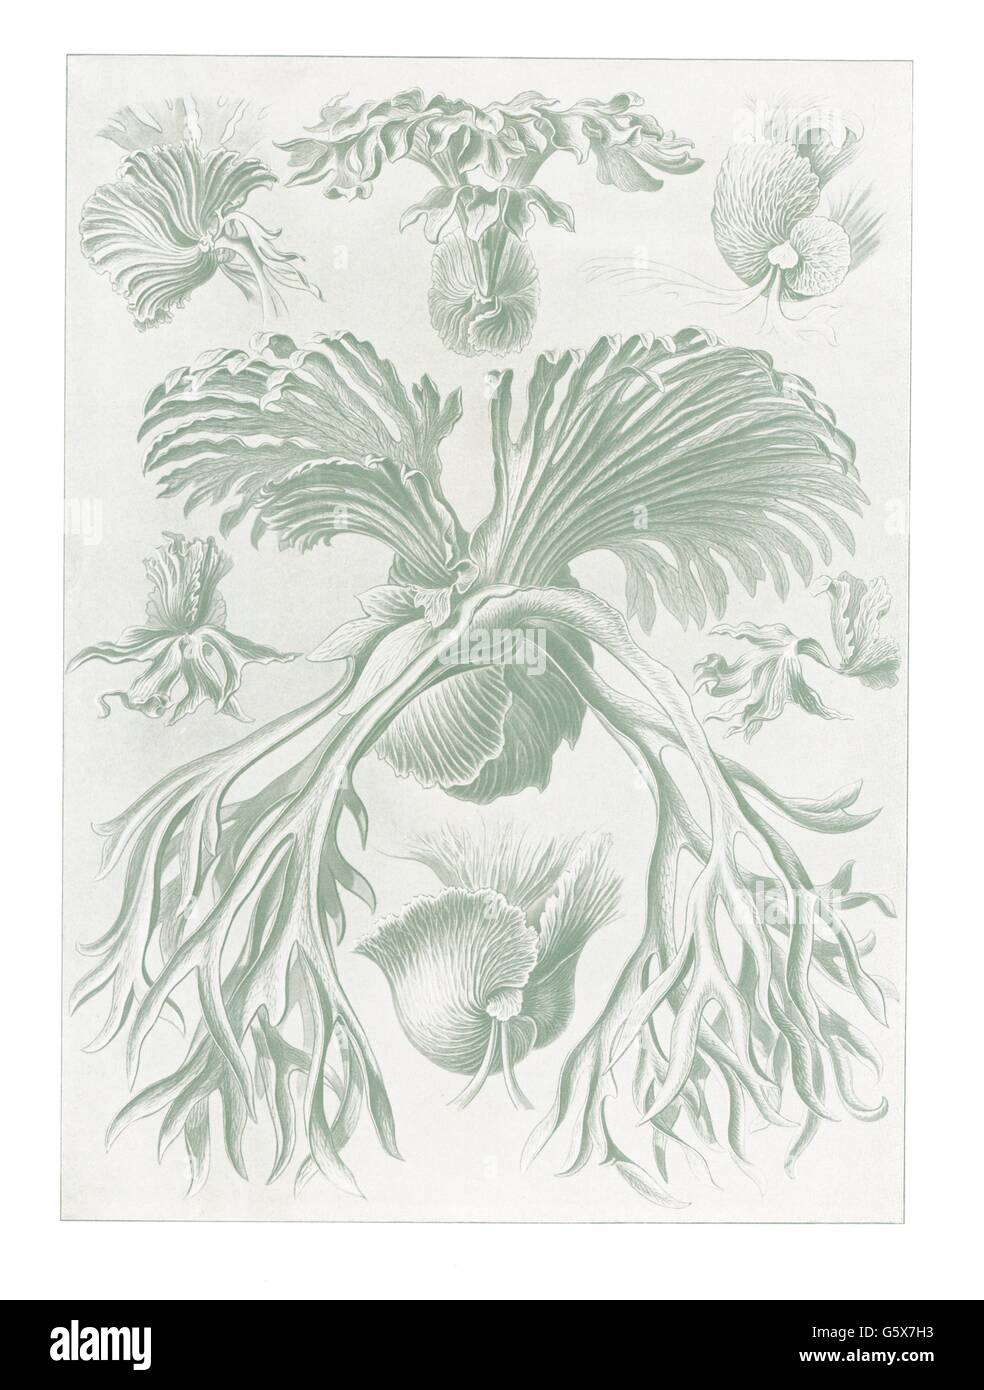 botanik, Farne, Filicinae, Farblithographie, aus: Ernst Haeckel, 'Kunstformen der Natur', Leipzig - Wien, 1899 - 1904, Additional-Rights-Clearences-not available Stockfoto